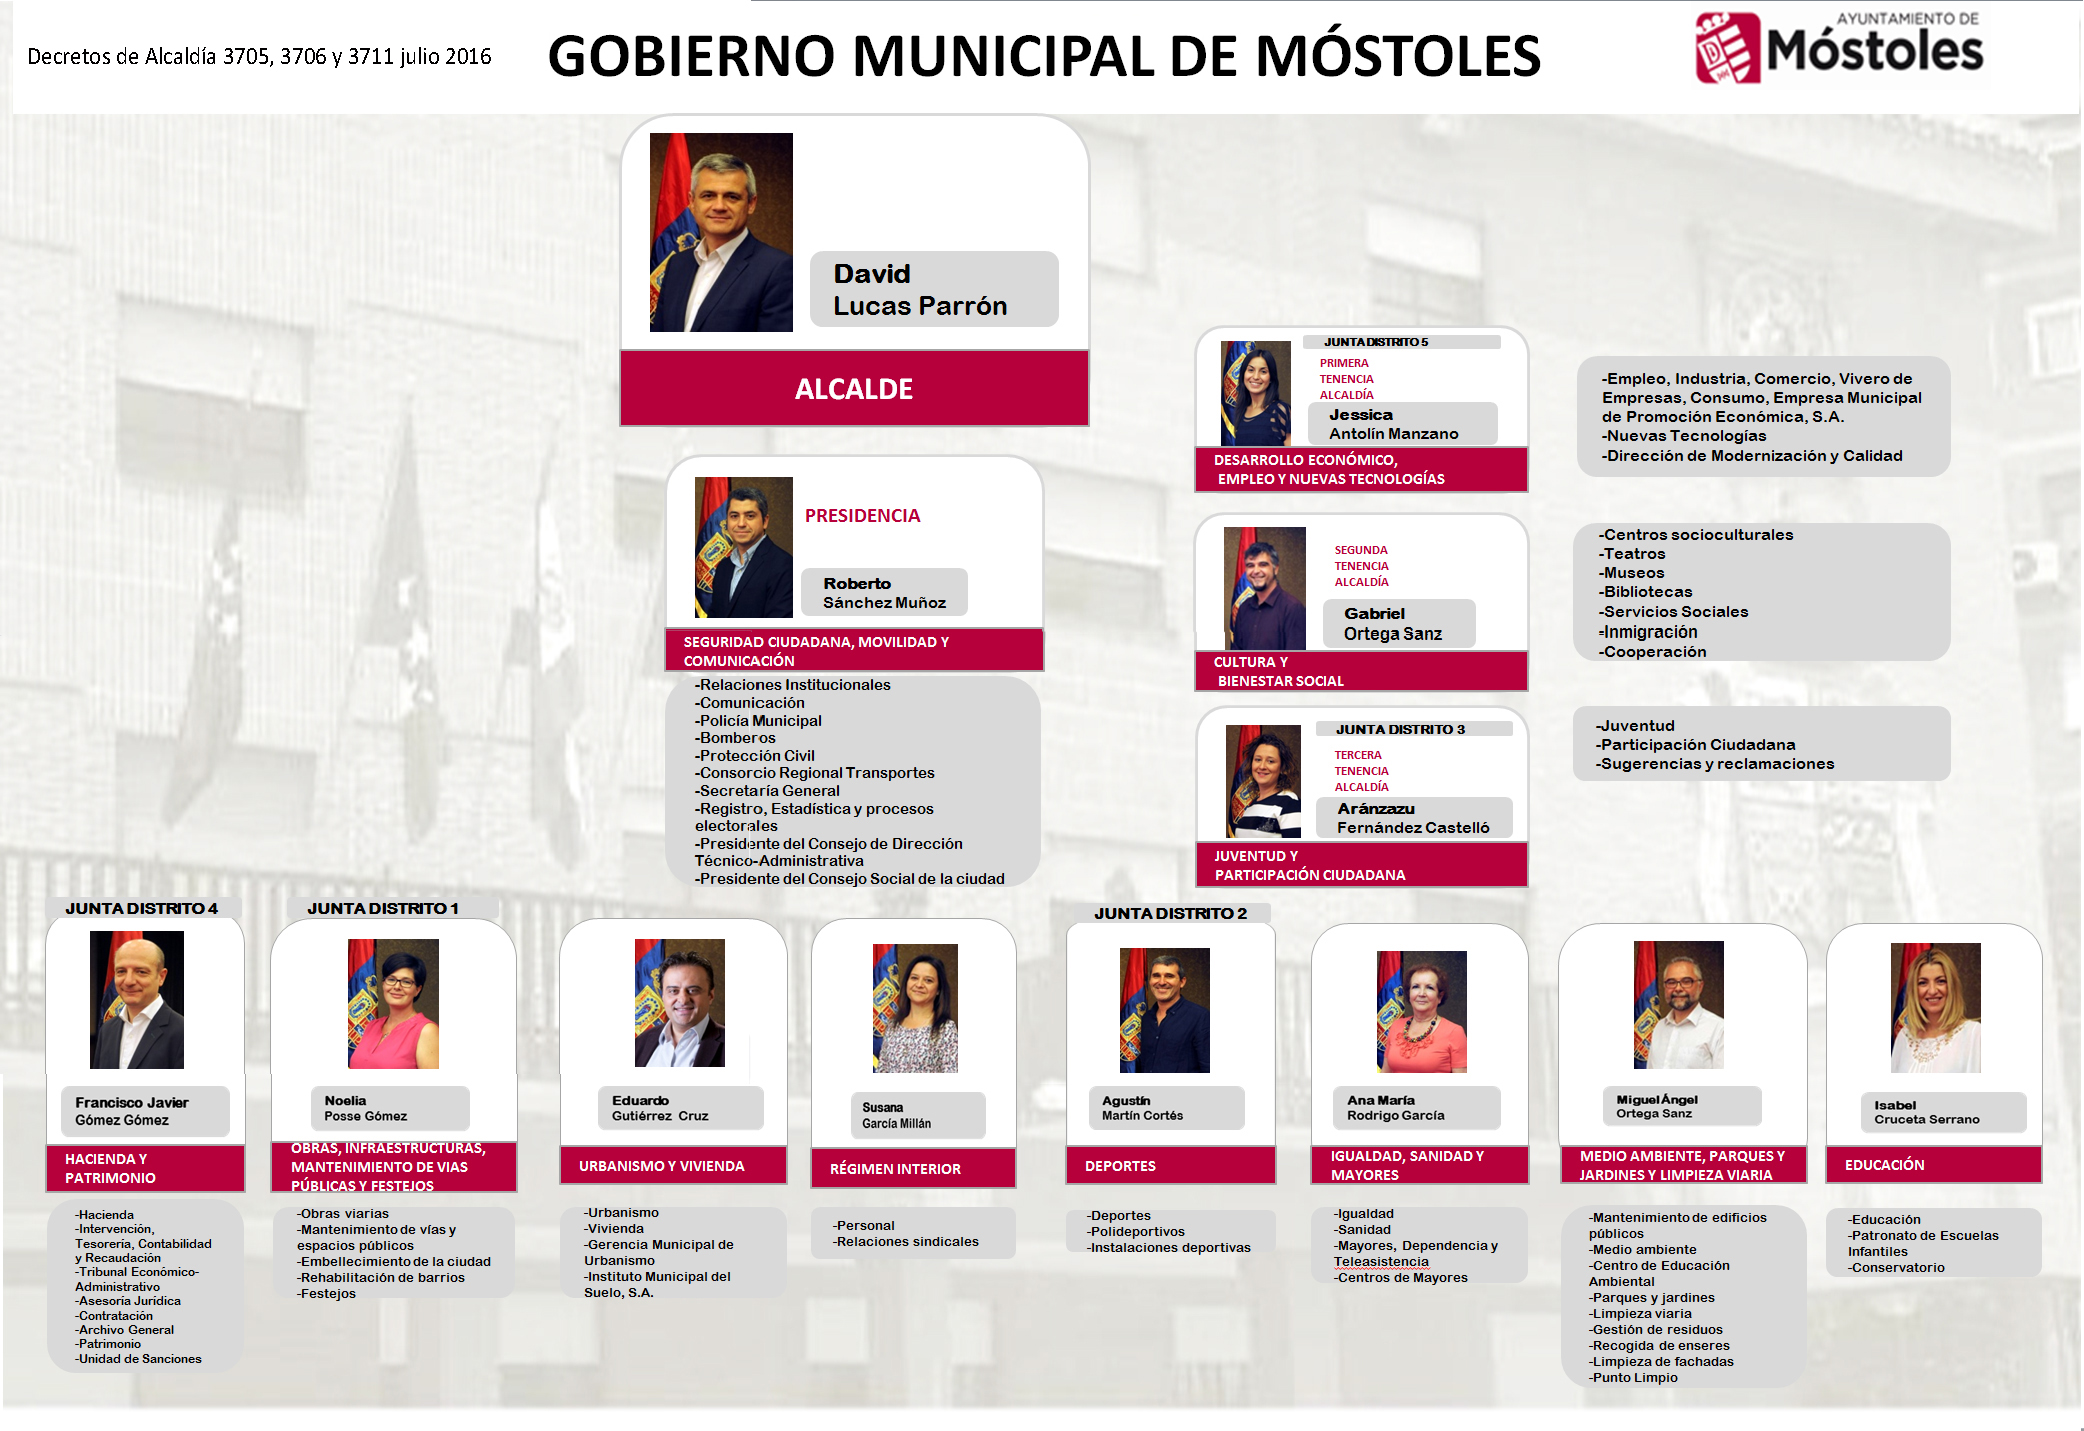 Estructura del Gobierno Municipal